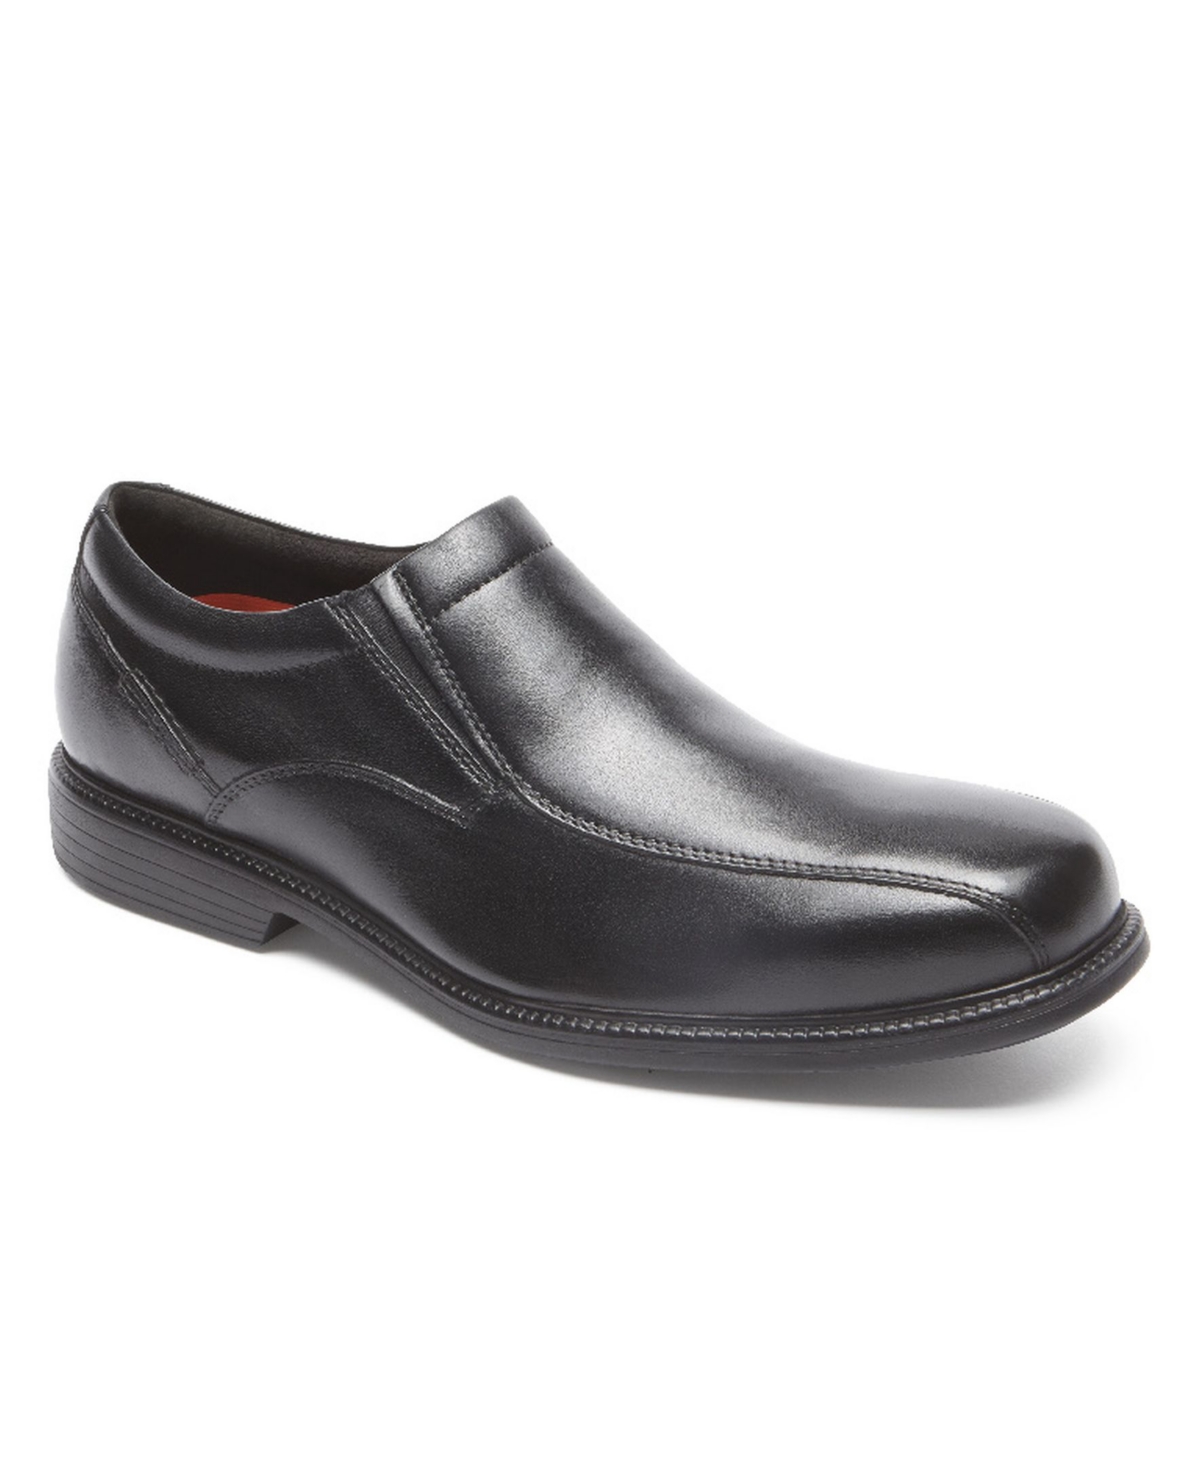 Men's Charlesroad Slip On Shoes - Black